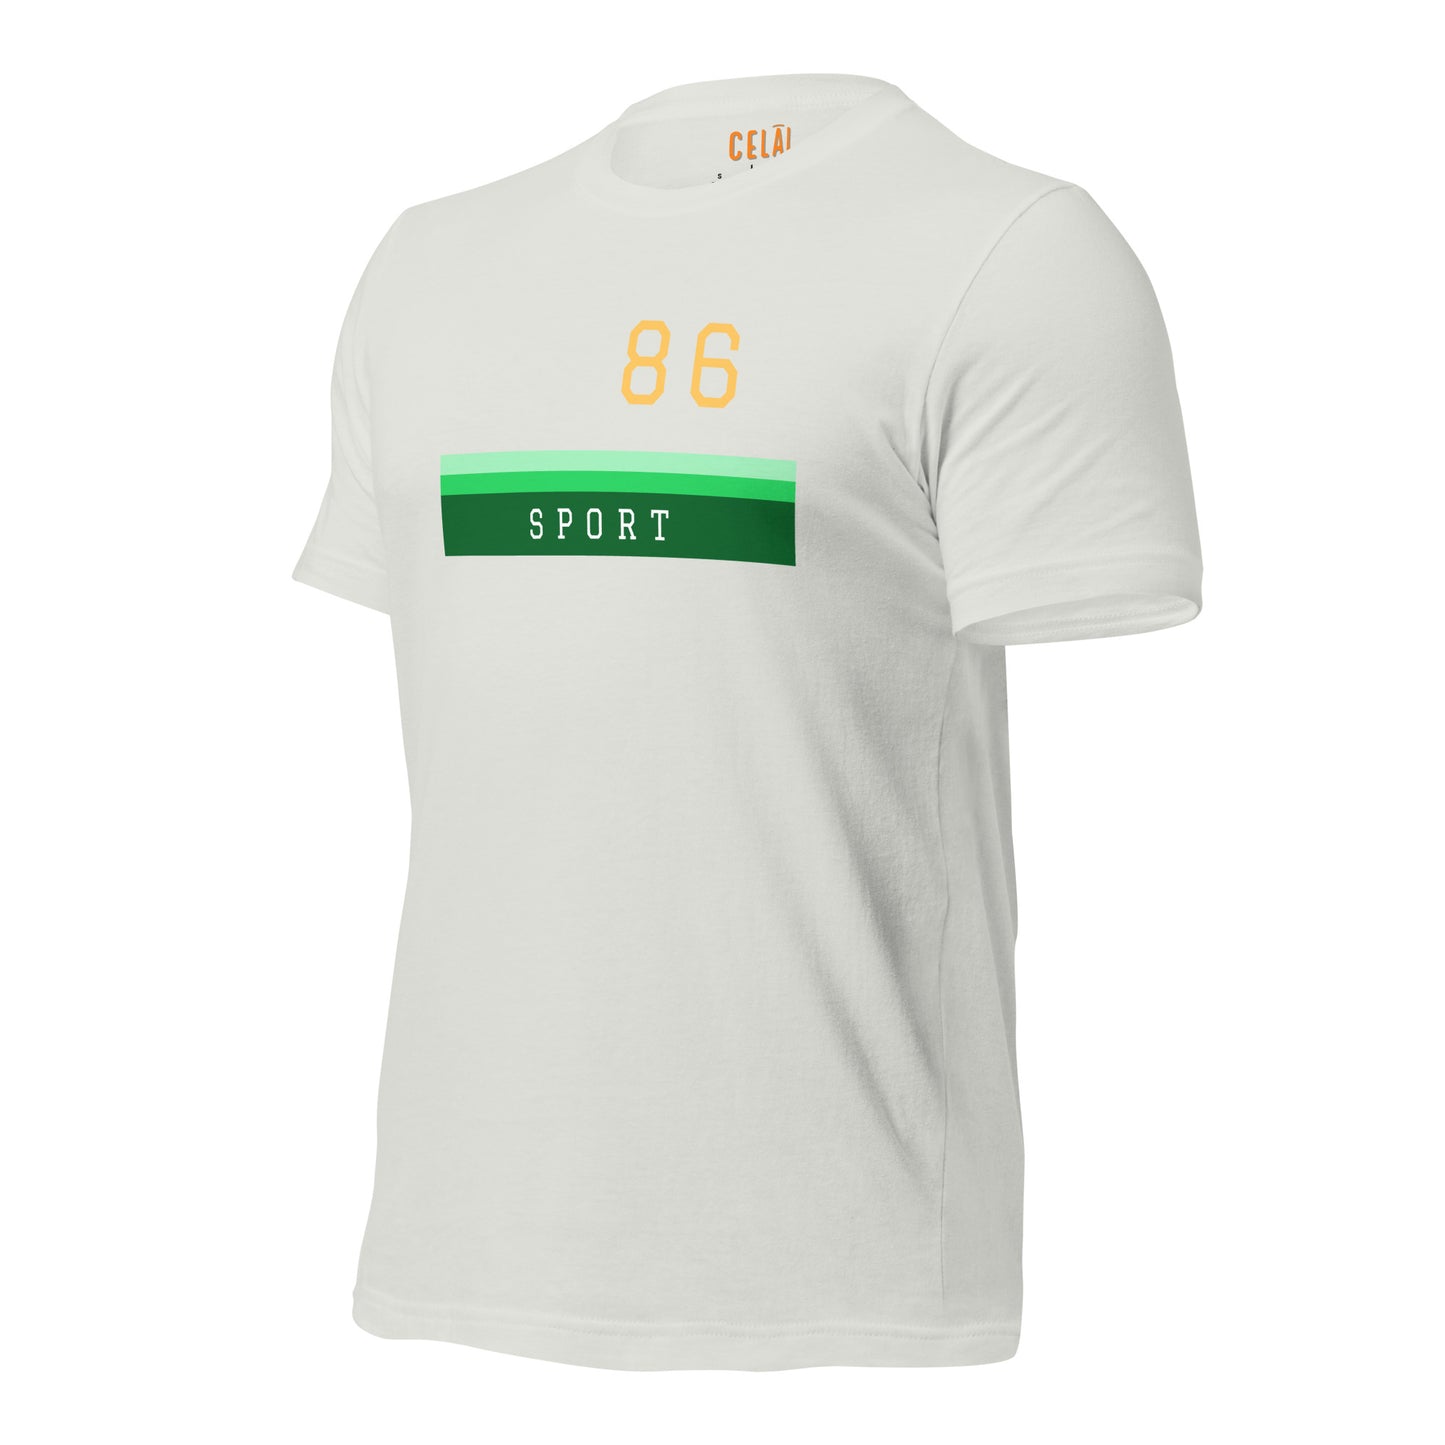 86 Unisex t-shirt